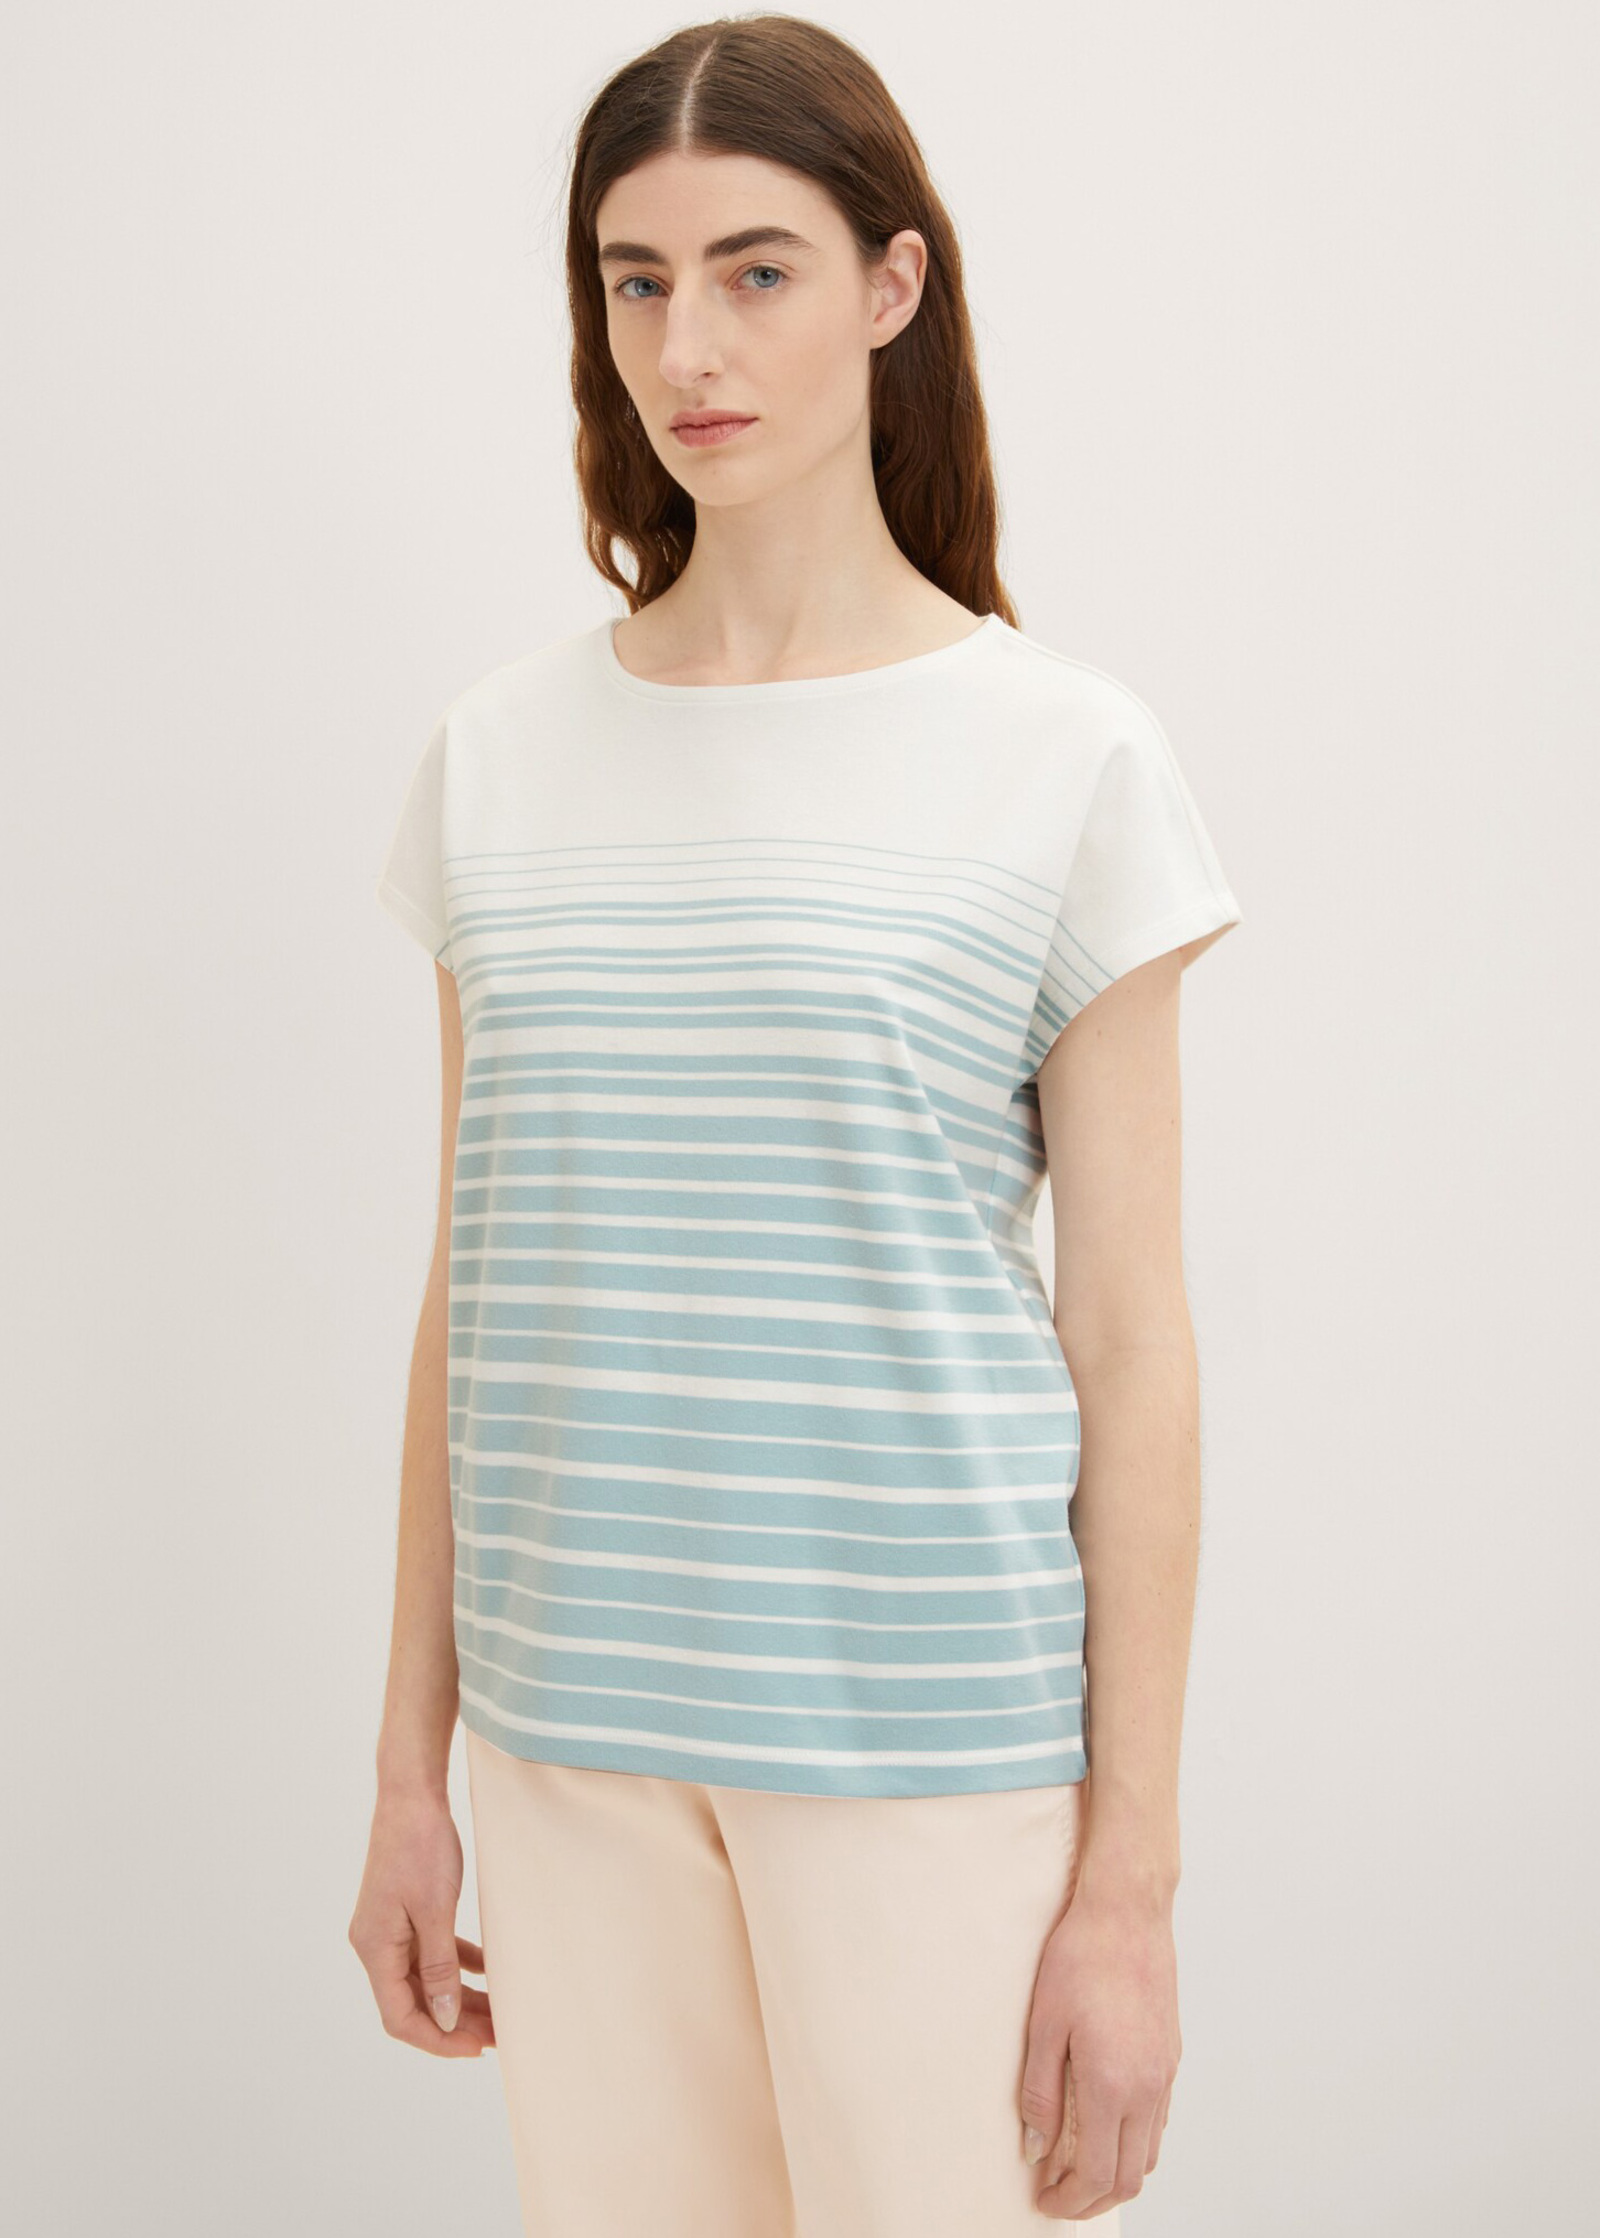 Tom Tailor Tshirt Blue Stripe Size - Gradient 1035480-31328 L